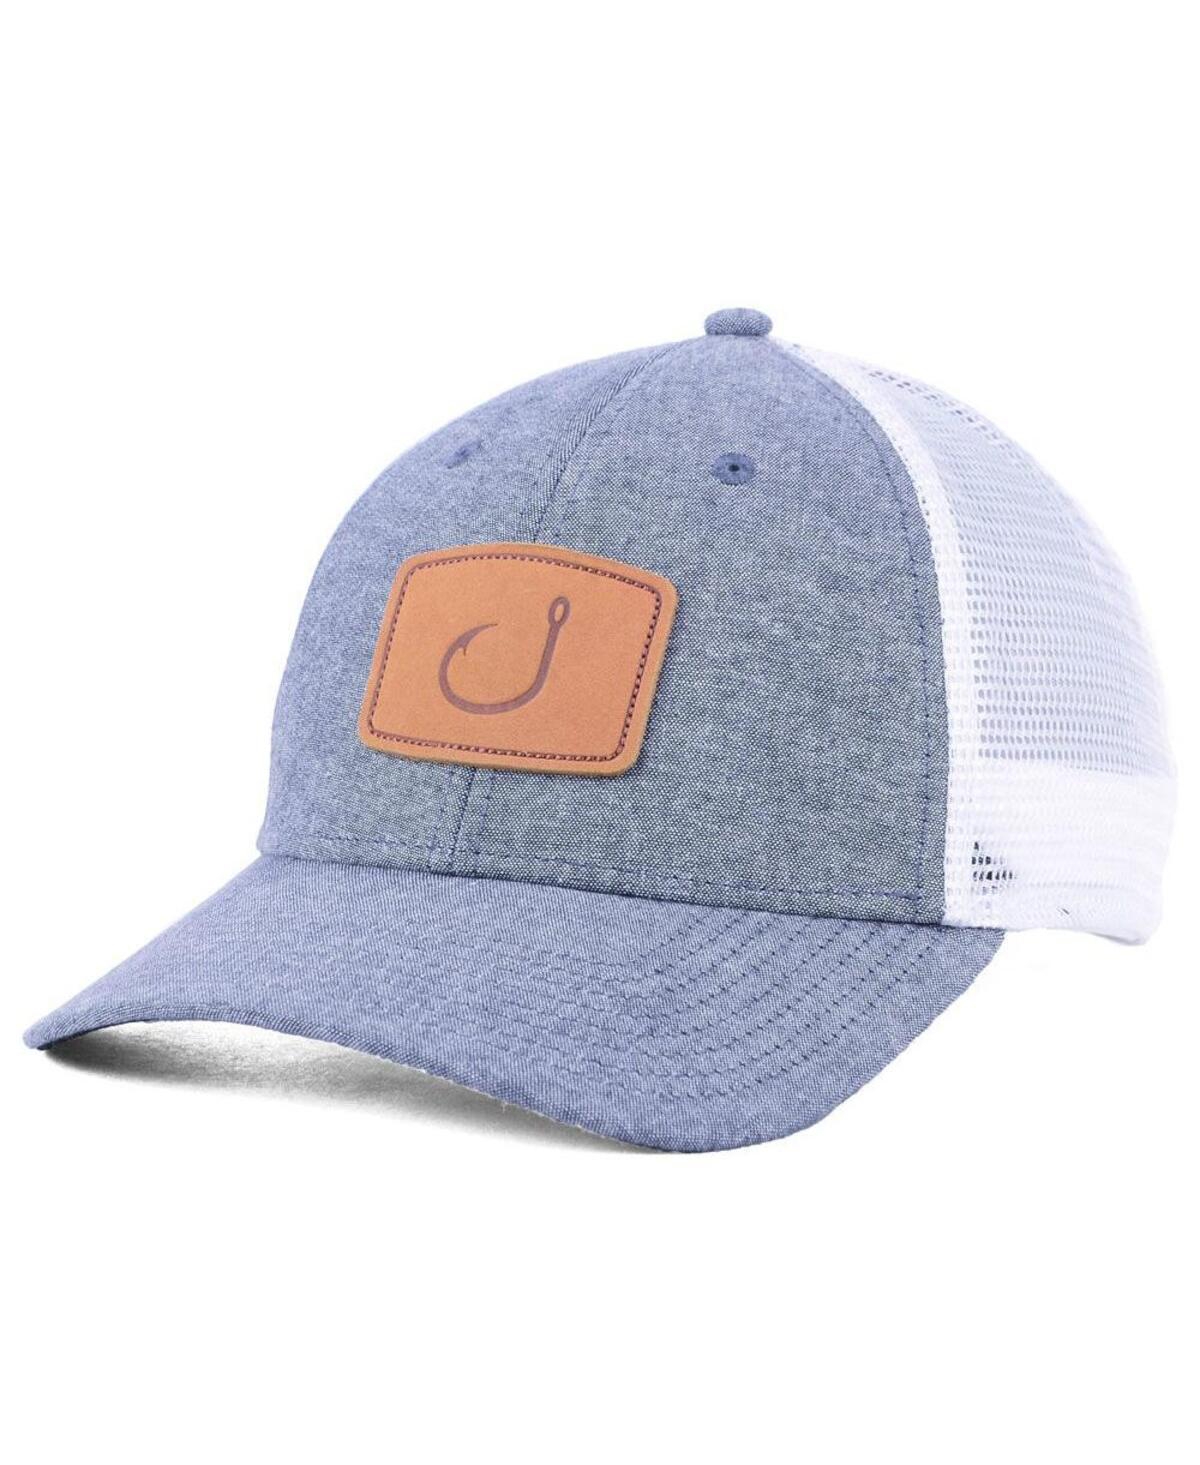 Avid Men's  Sports Lay Day Trucker Snapback Adjustable Hat In Gray,white